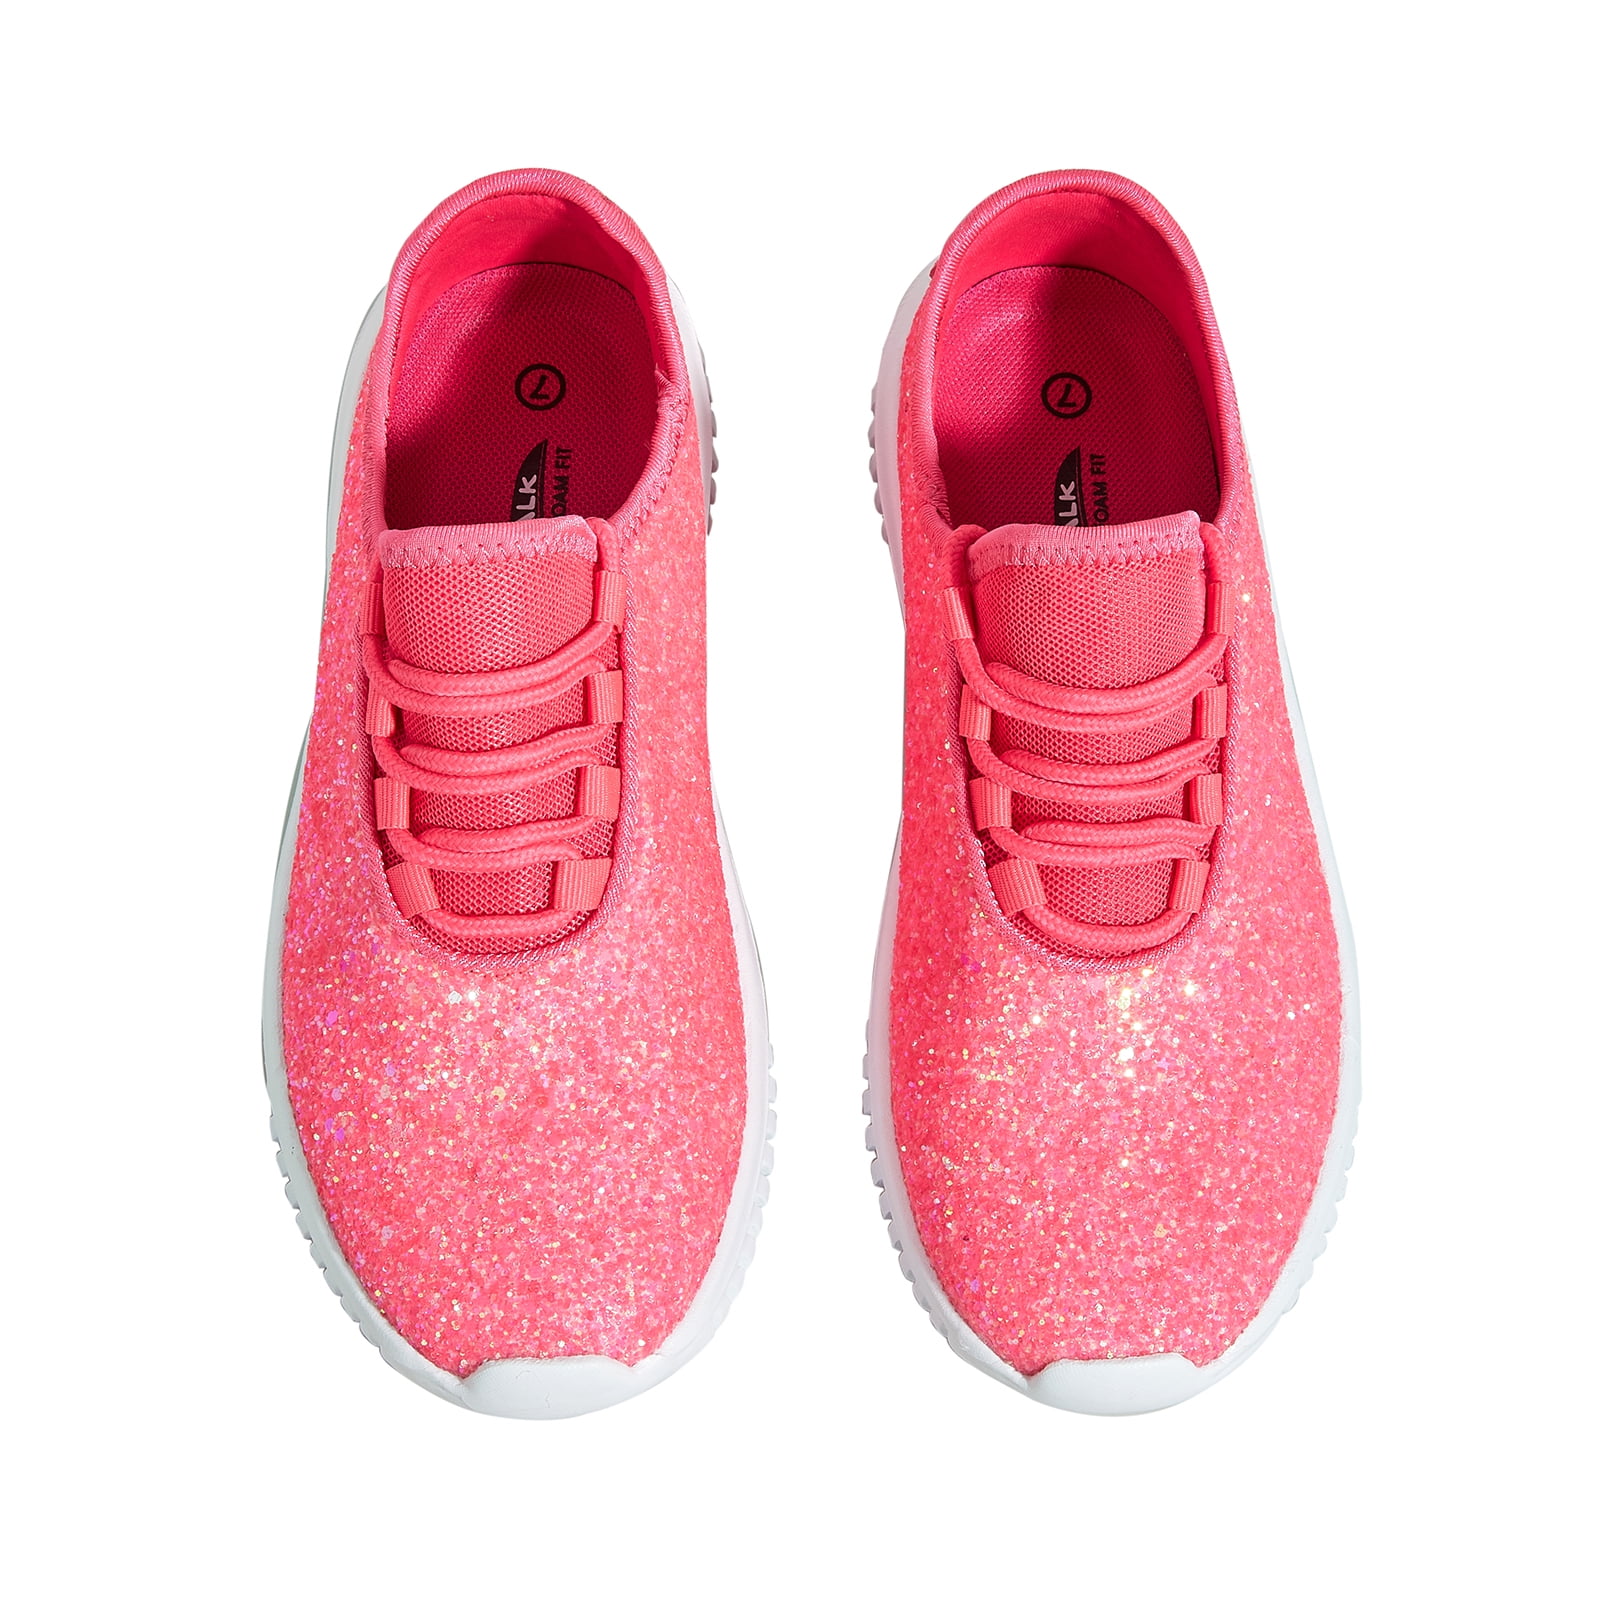 LUCKY STEP Fashion Glitter Sneakers for Womens/Girls Silp On Running Shoes Lightweigt Tennis Walking Pink,7B(M)US) - Walmart.com